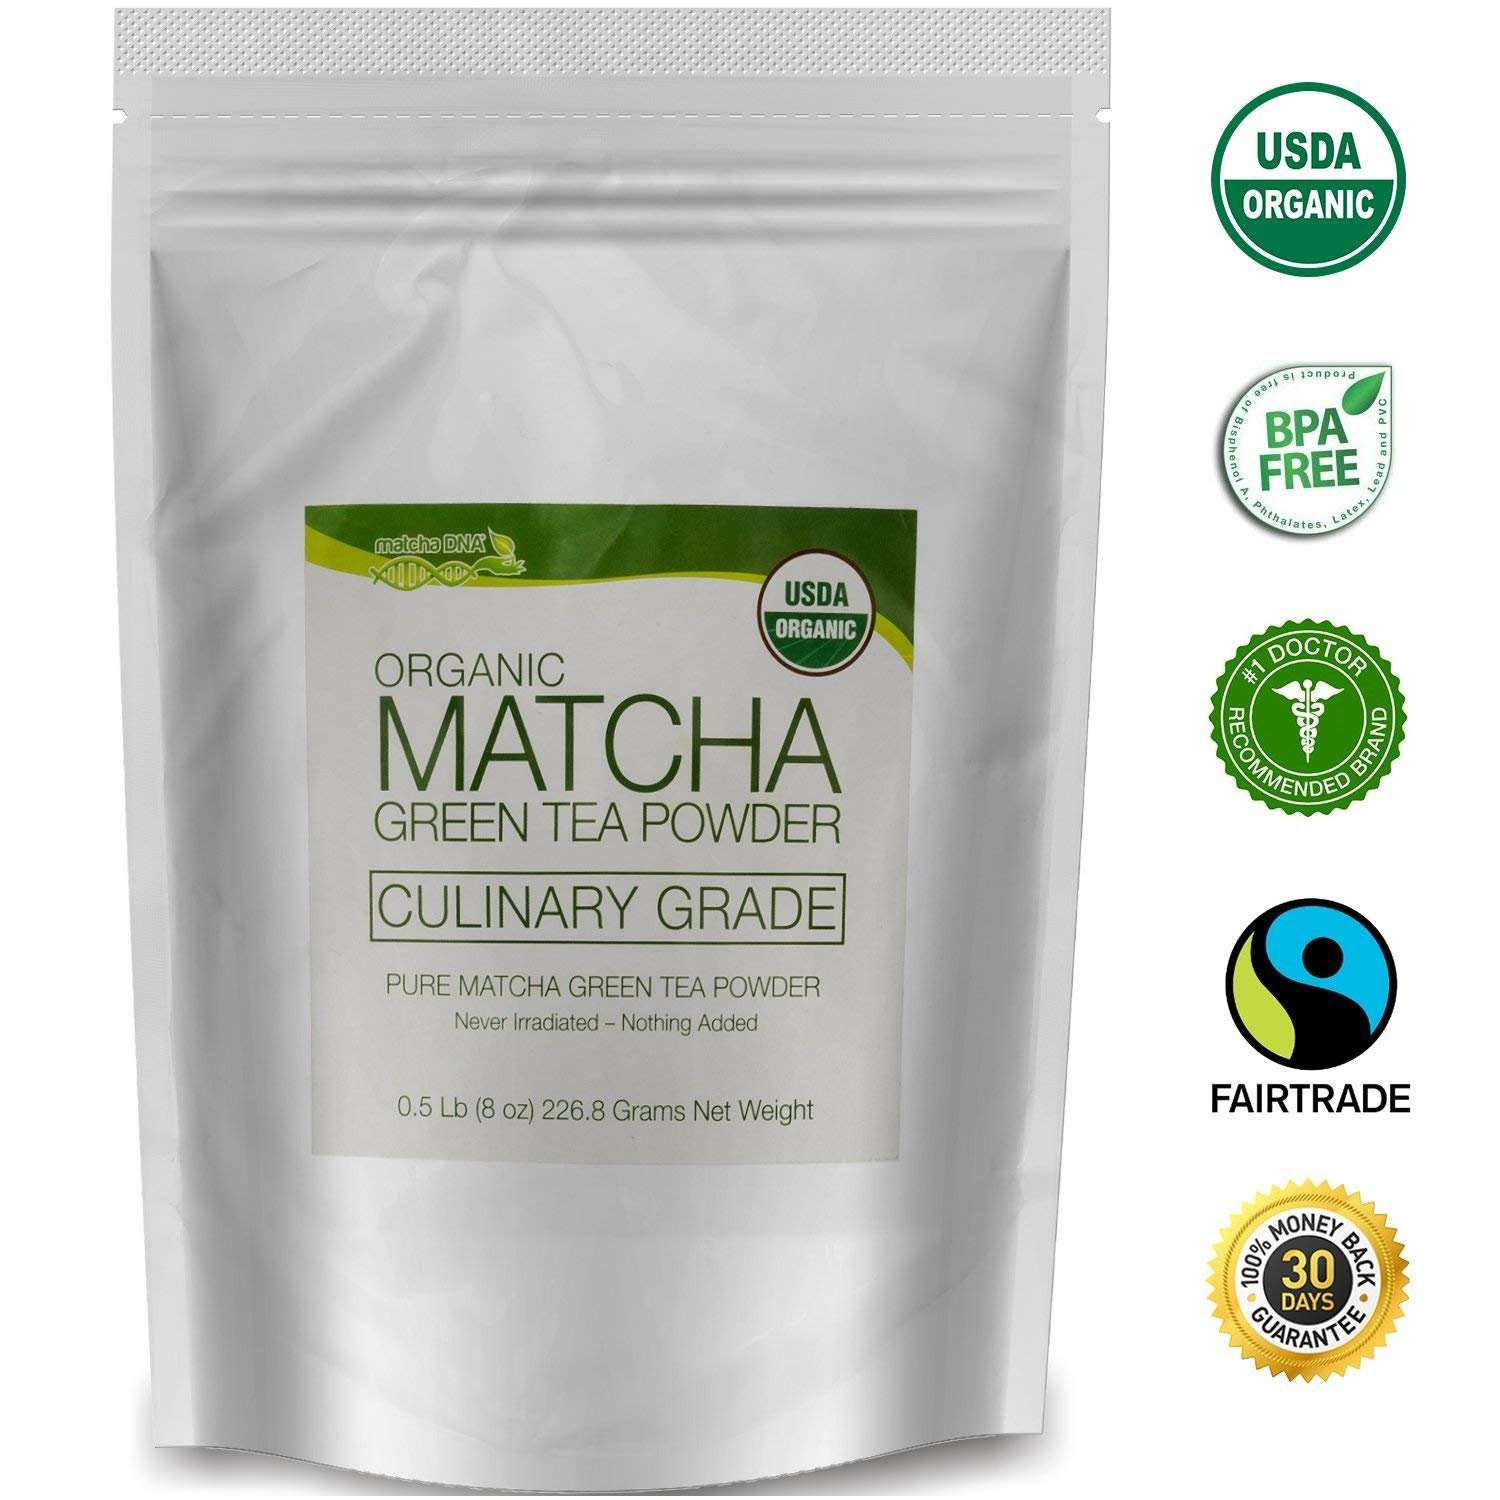 MatchaDNA USDA 8 oz Organic Matcha Green Tea Powder ...